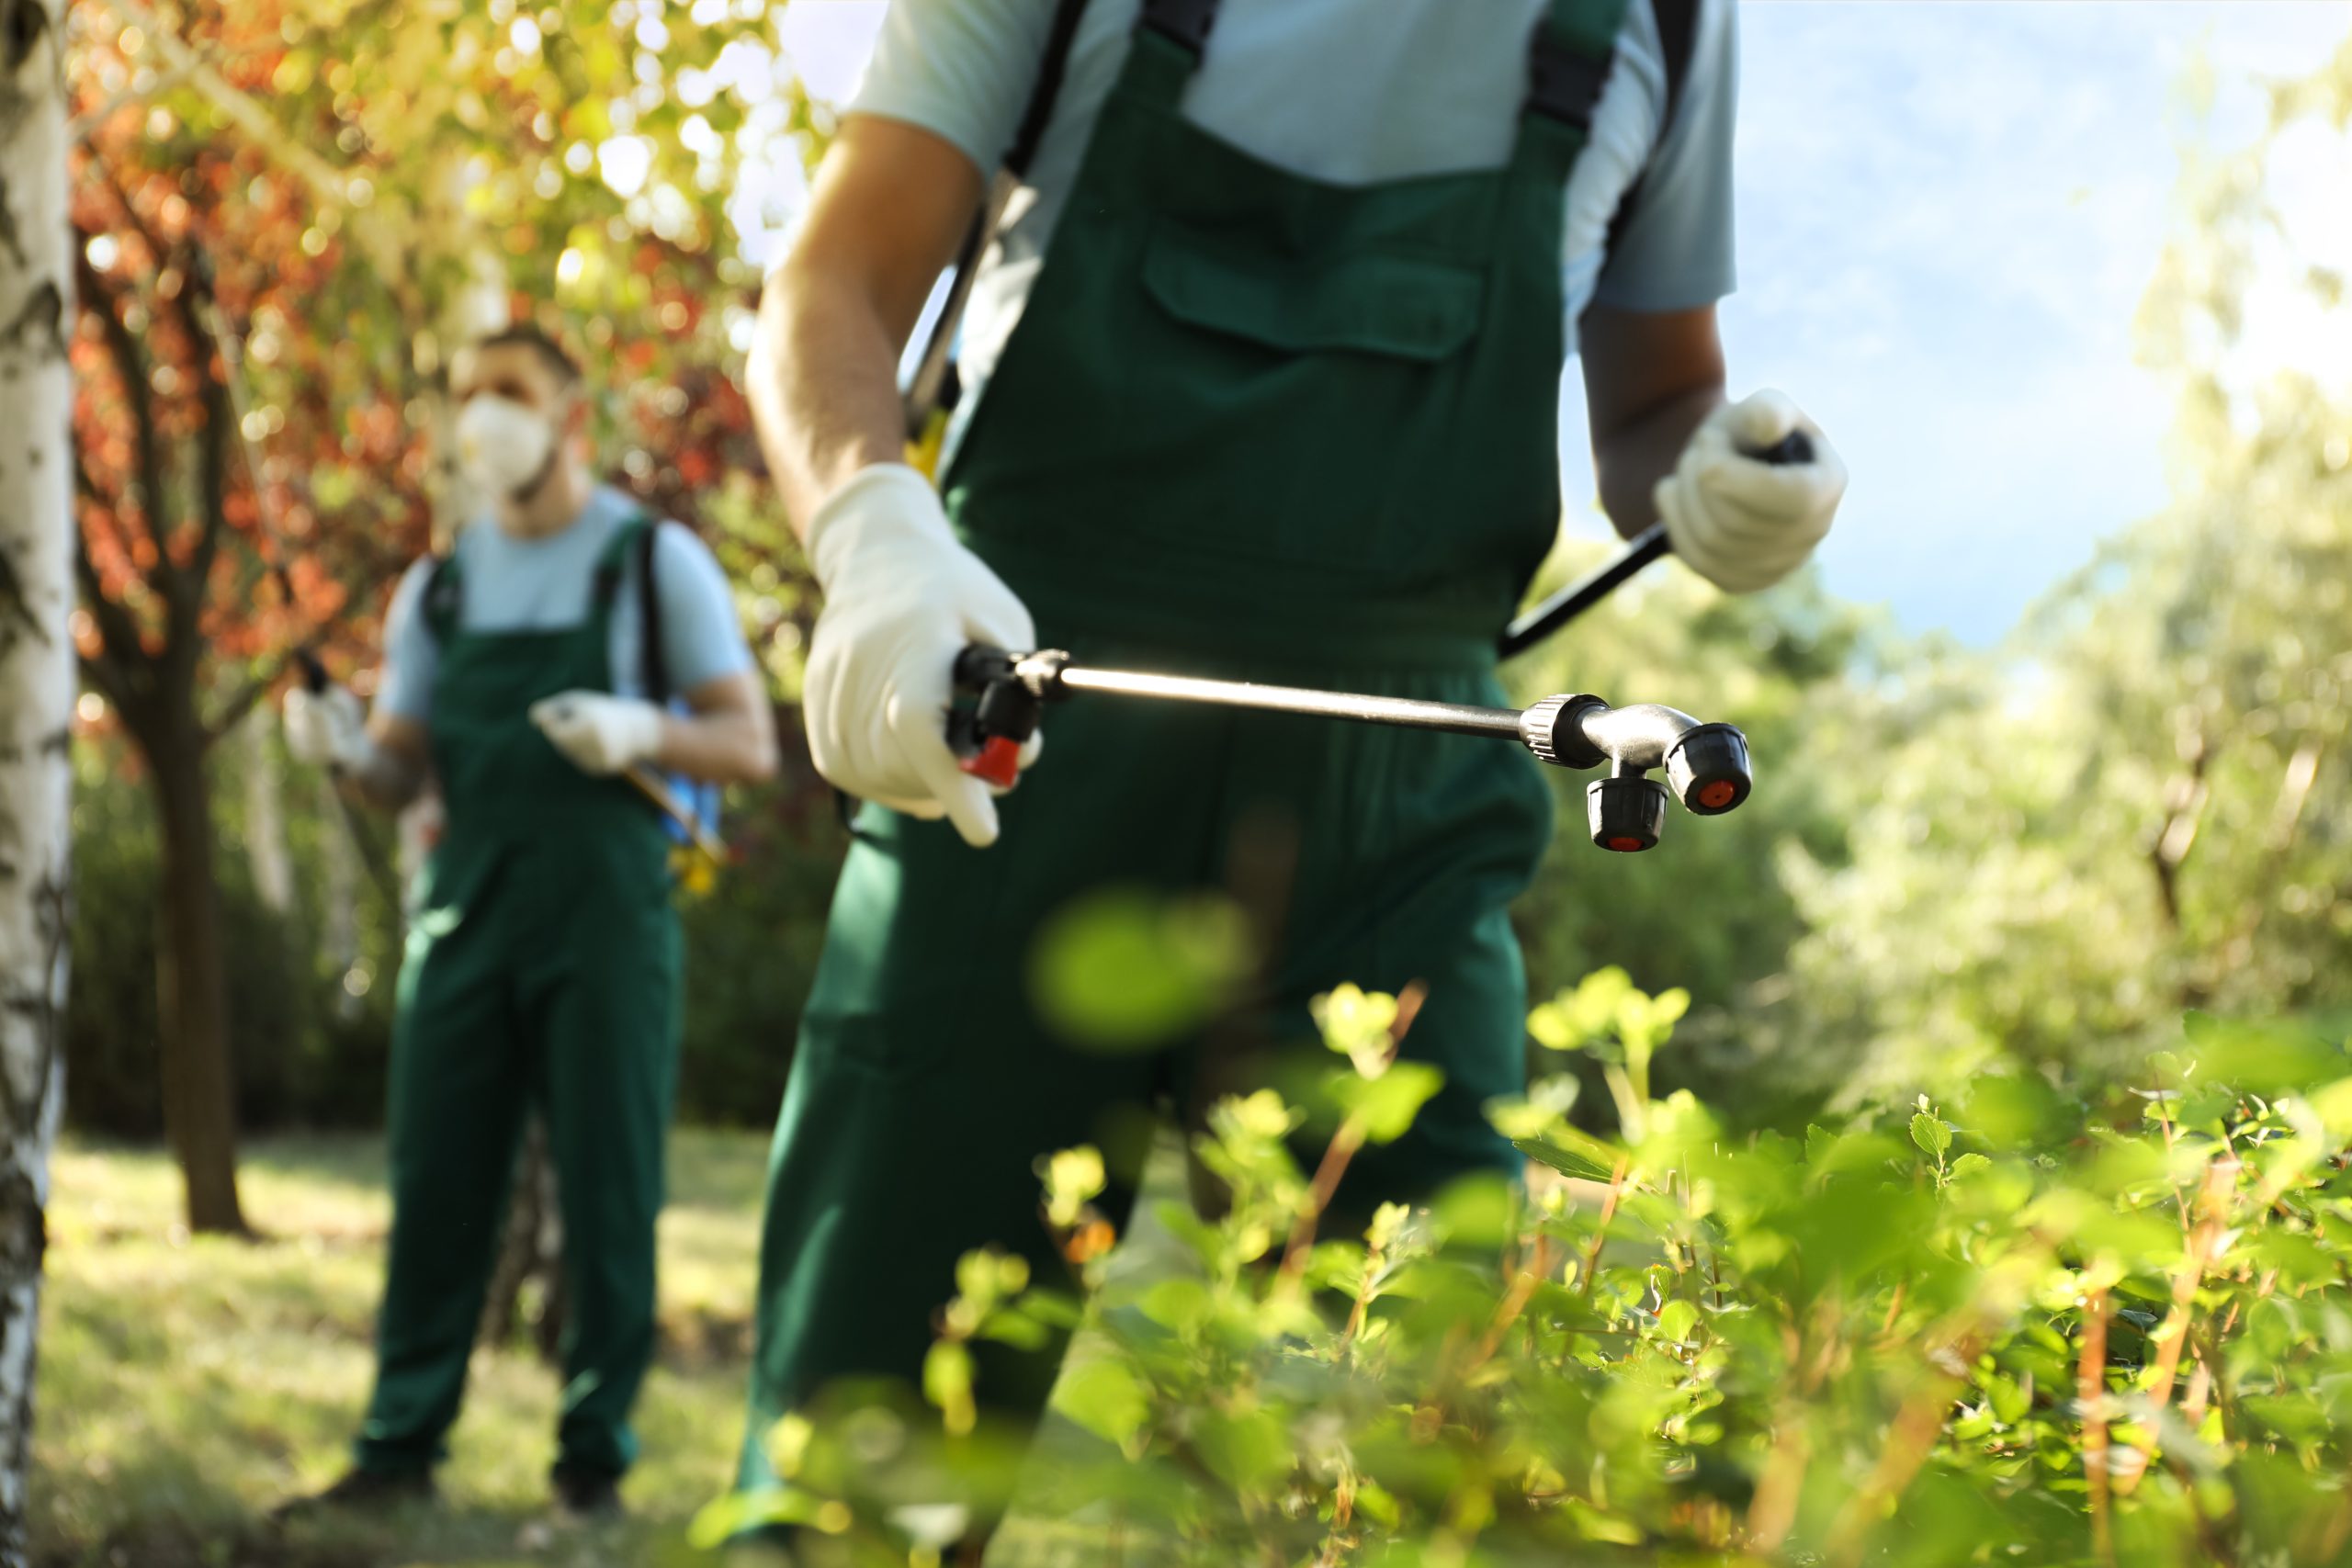 Workers spraying pesticide onto green bush outdoors, closeup. Pest control